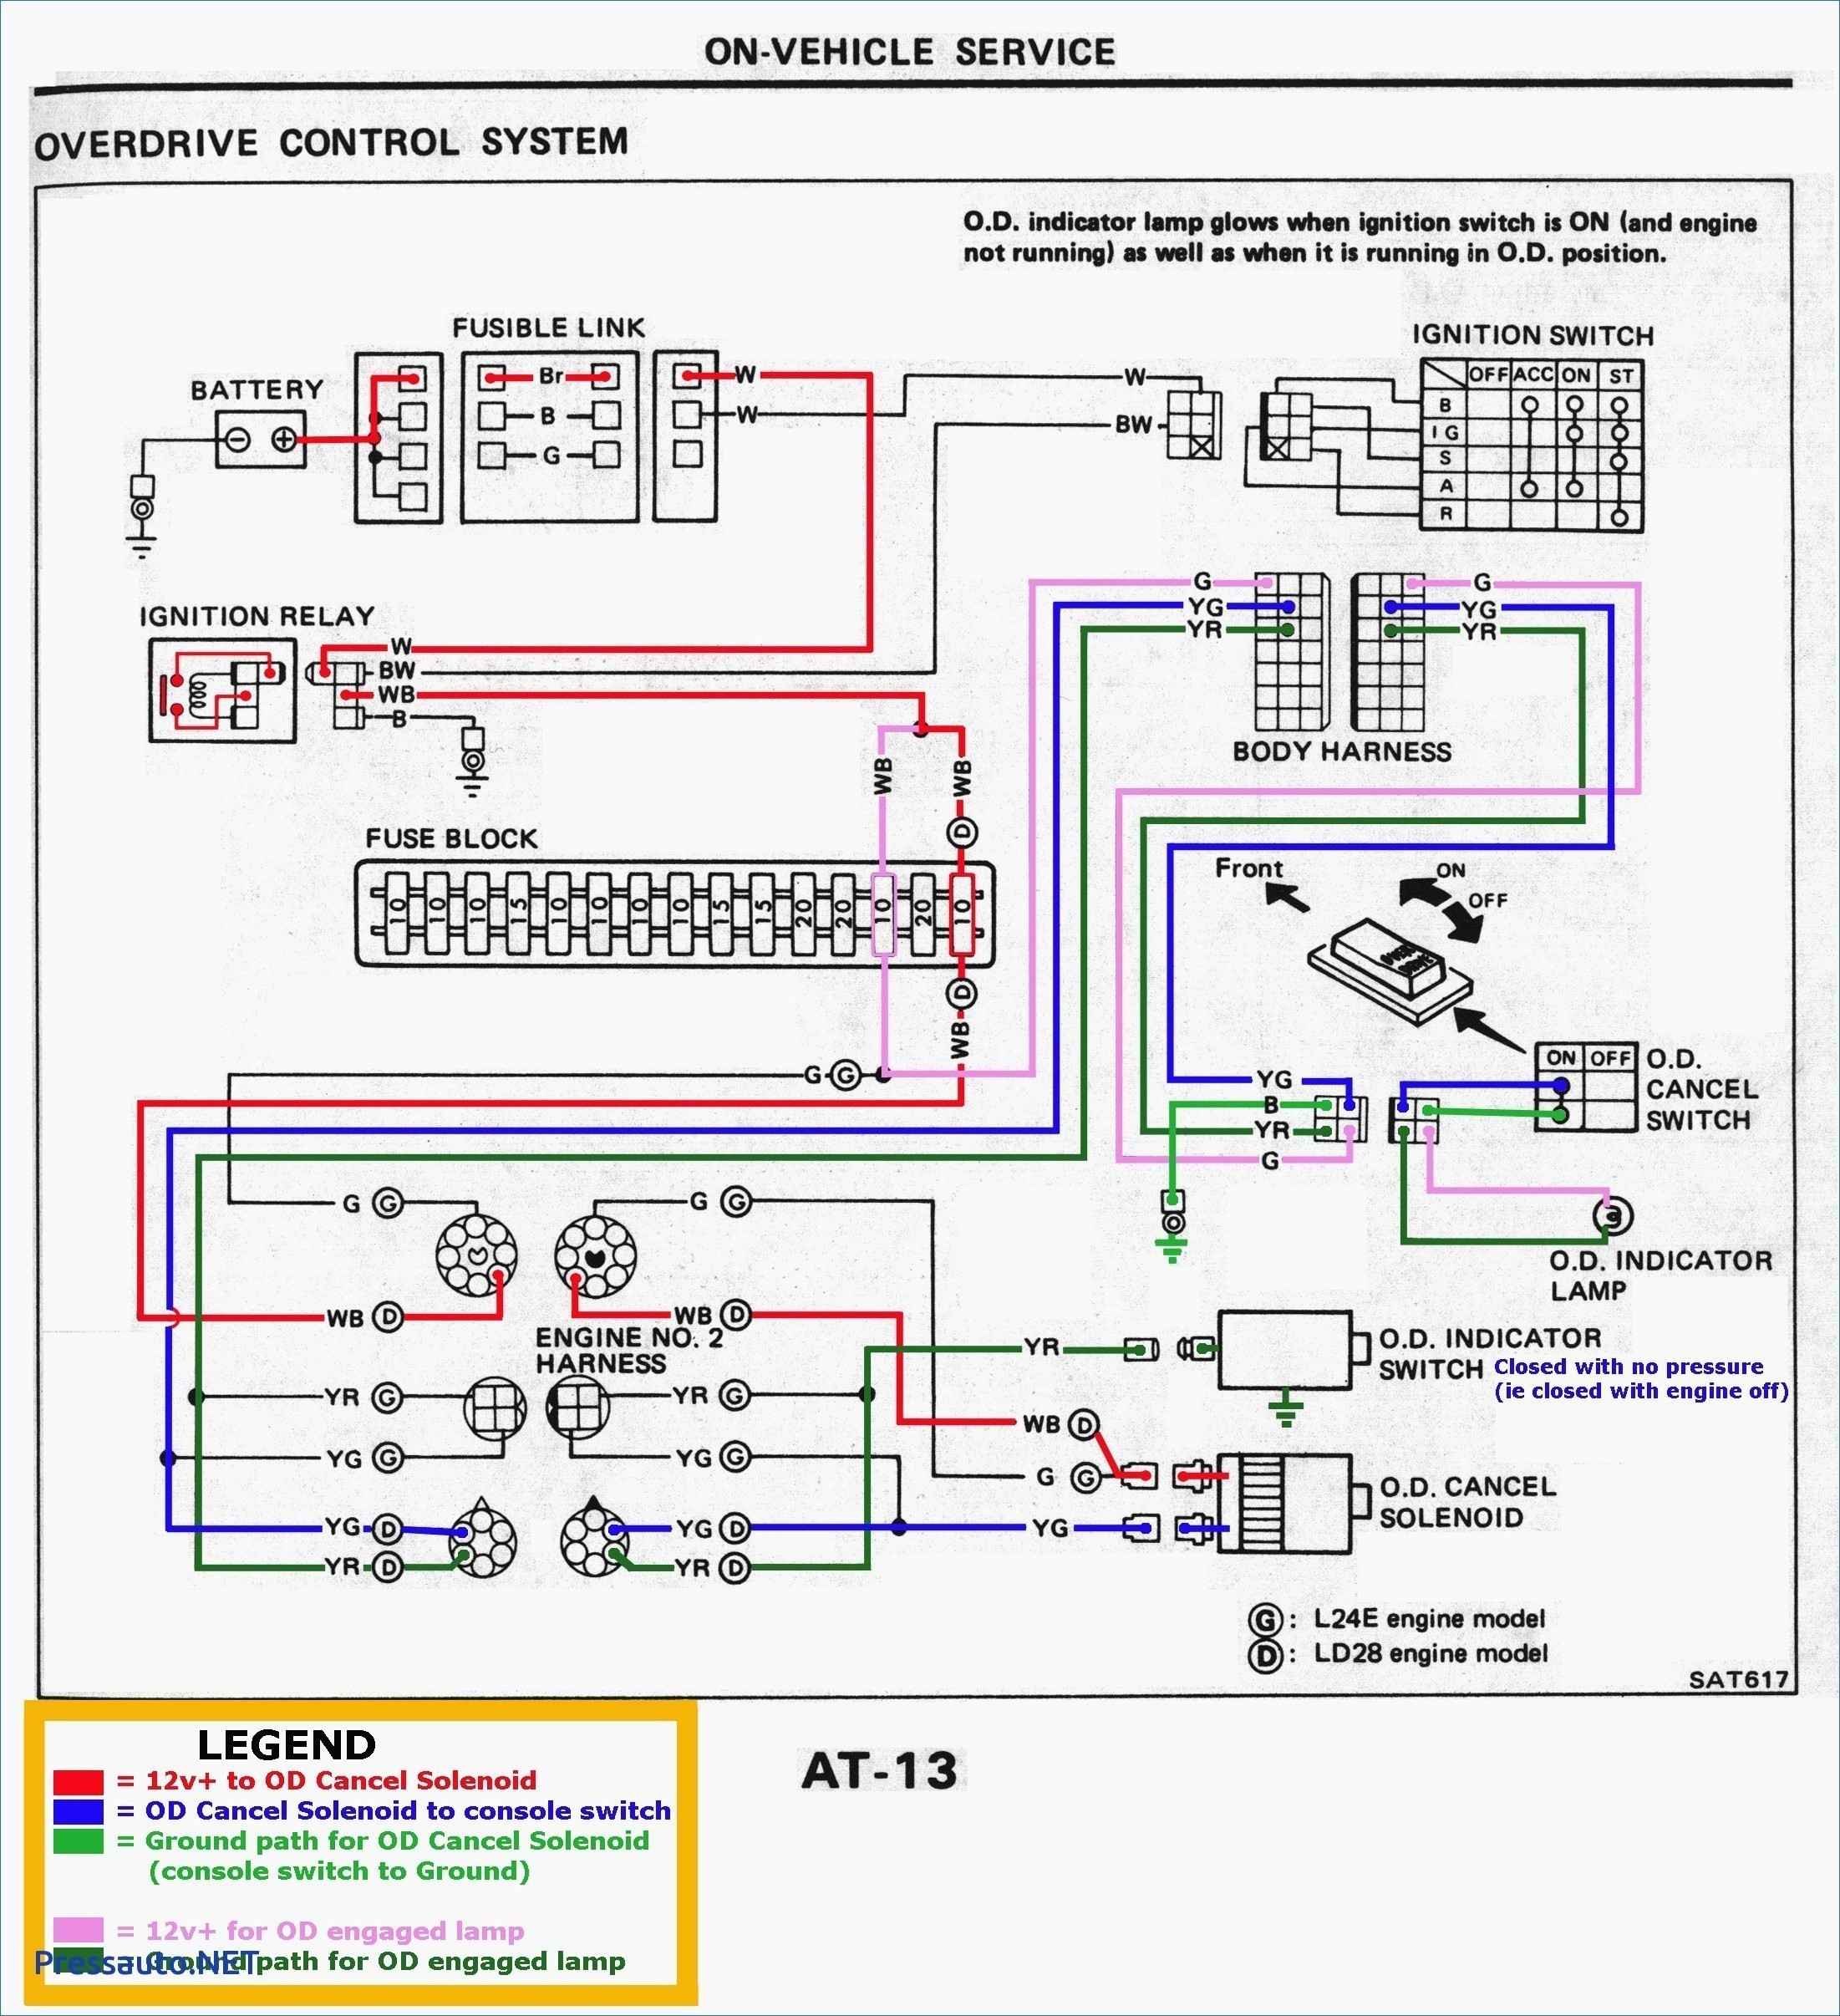 Diagram Of Car Electrical System Automotive Electrical Wiring Diagrams Electrical Circuit 2018 Wiring